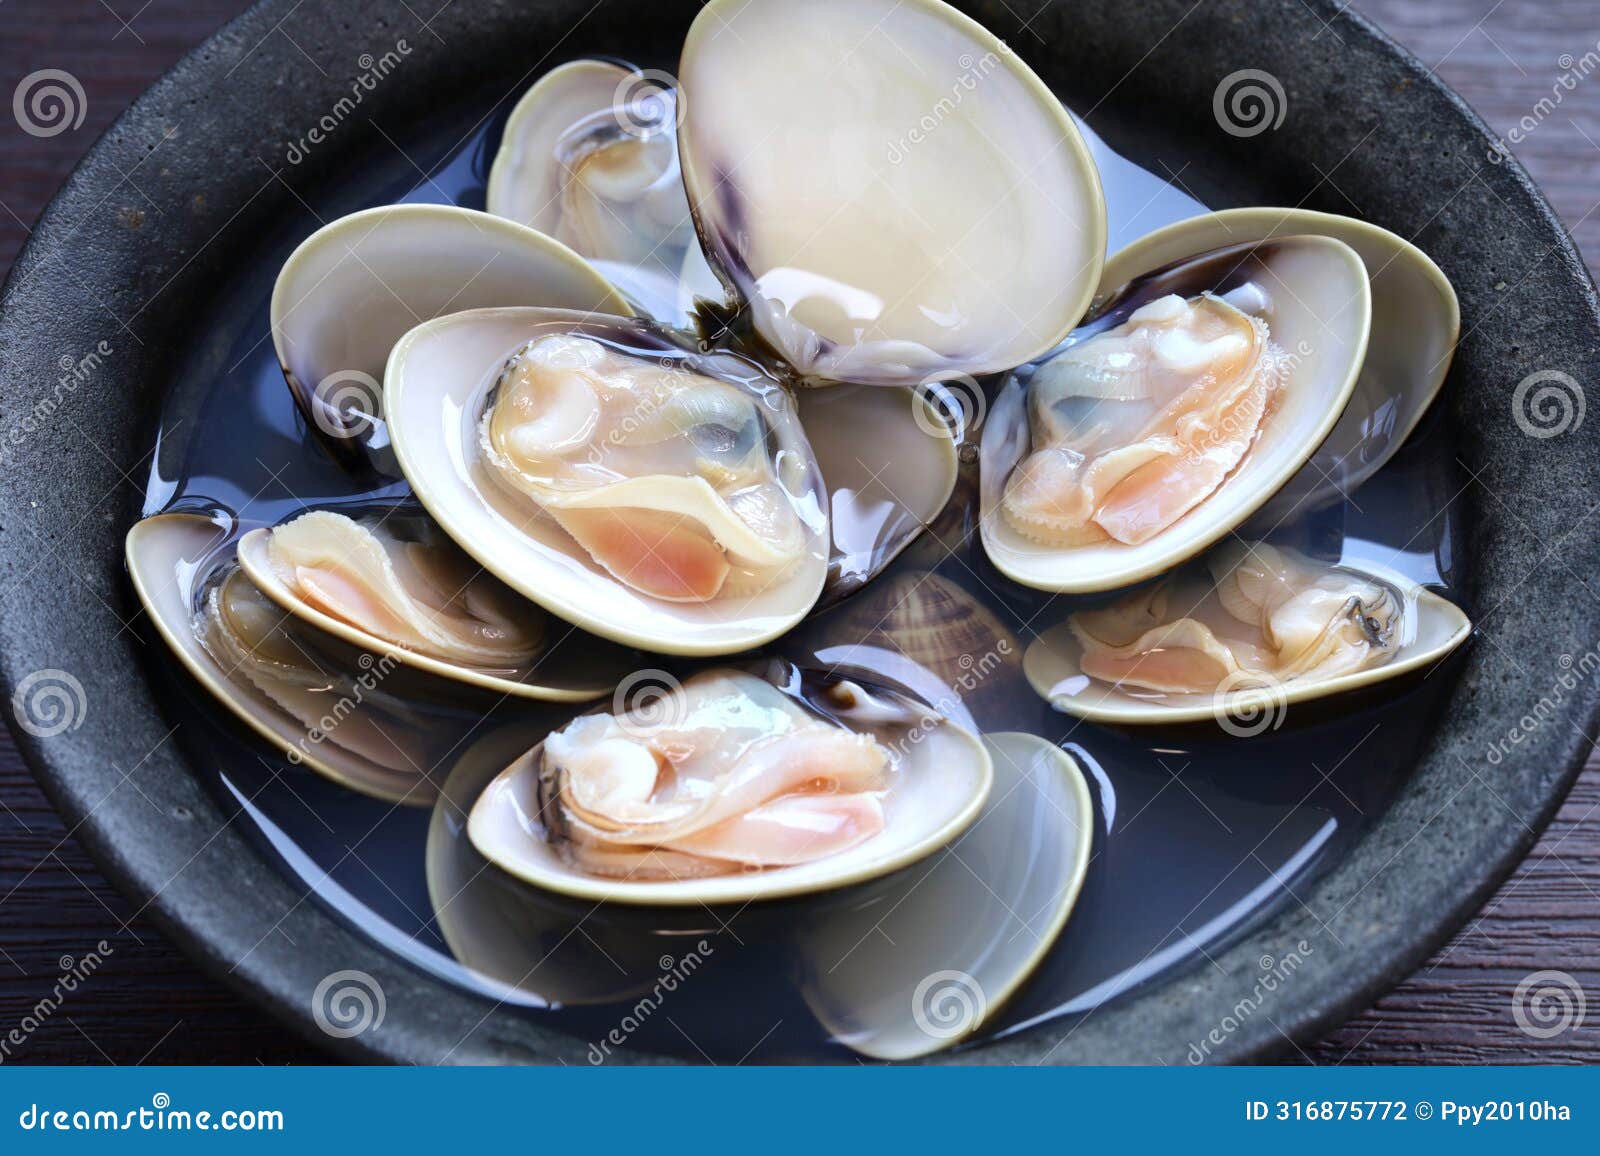 steamed hamaguri clams with japanese rice wine (sake).